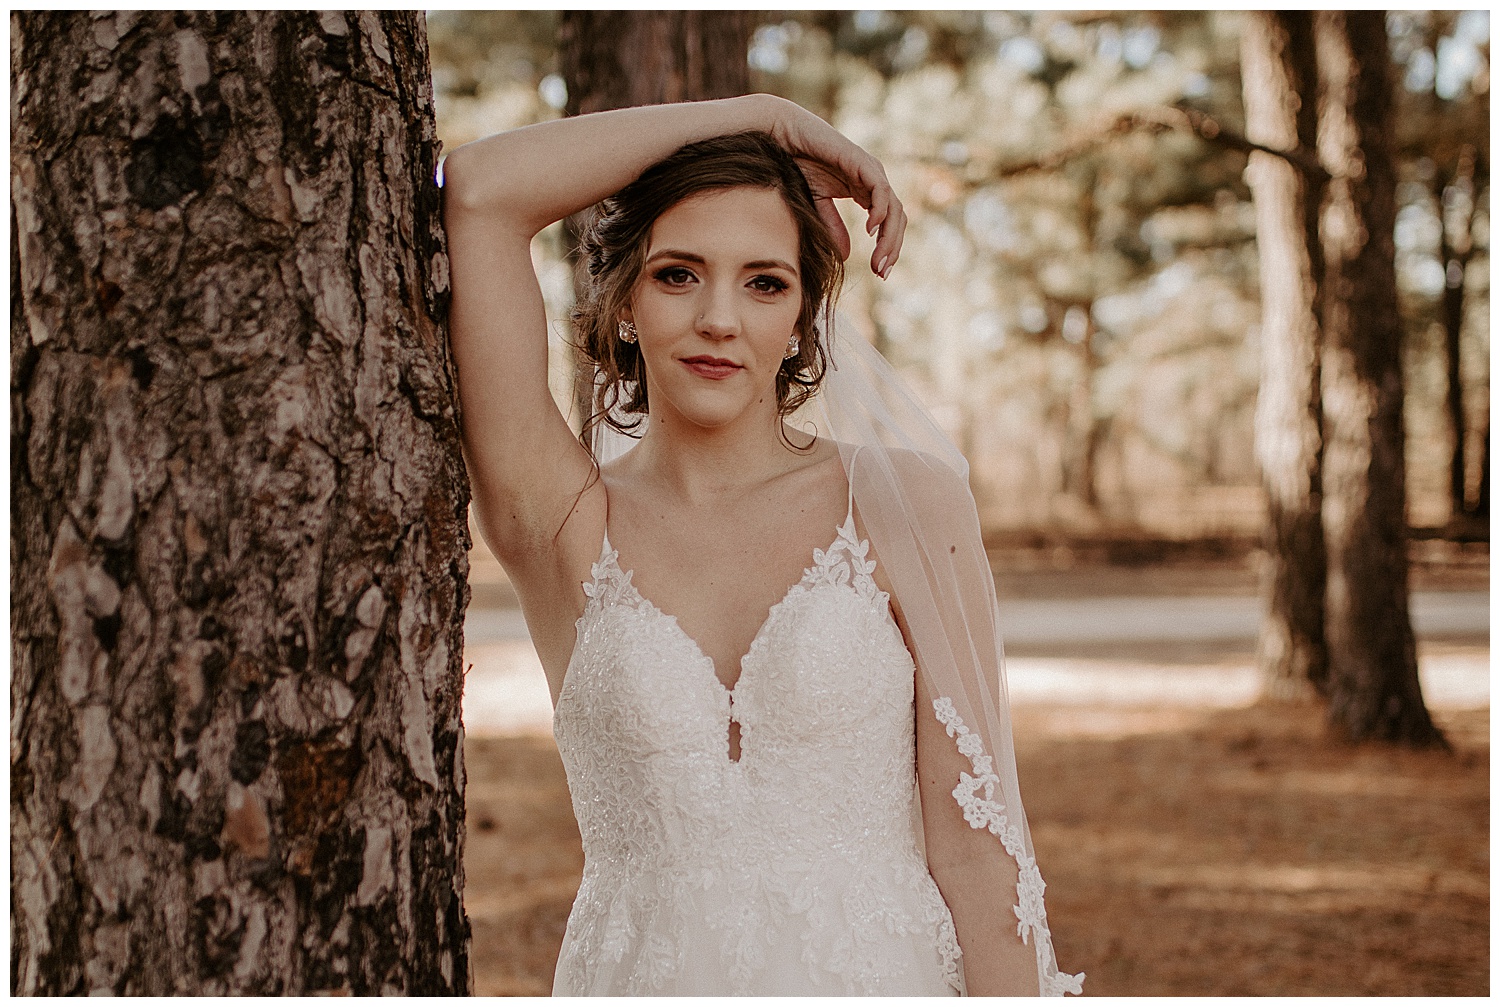 Laken-Mackenzie-Photography-Cheyenne-Bridal-Session-Dallas-Fort-Worth-Wedding-Photographer17.jpg